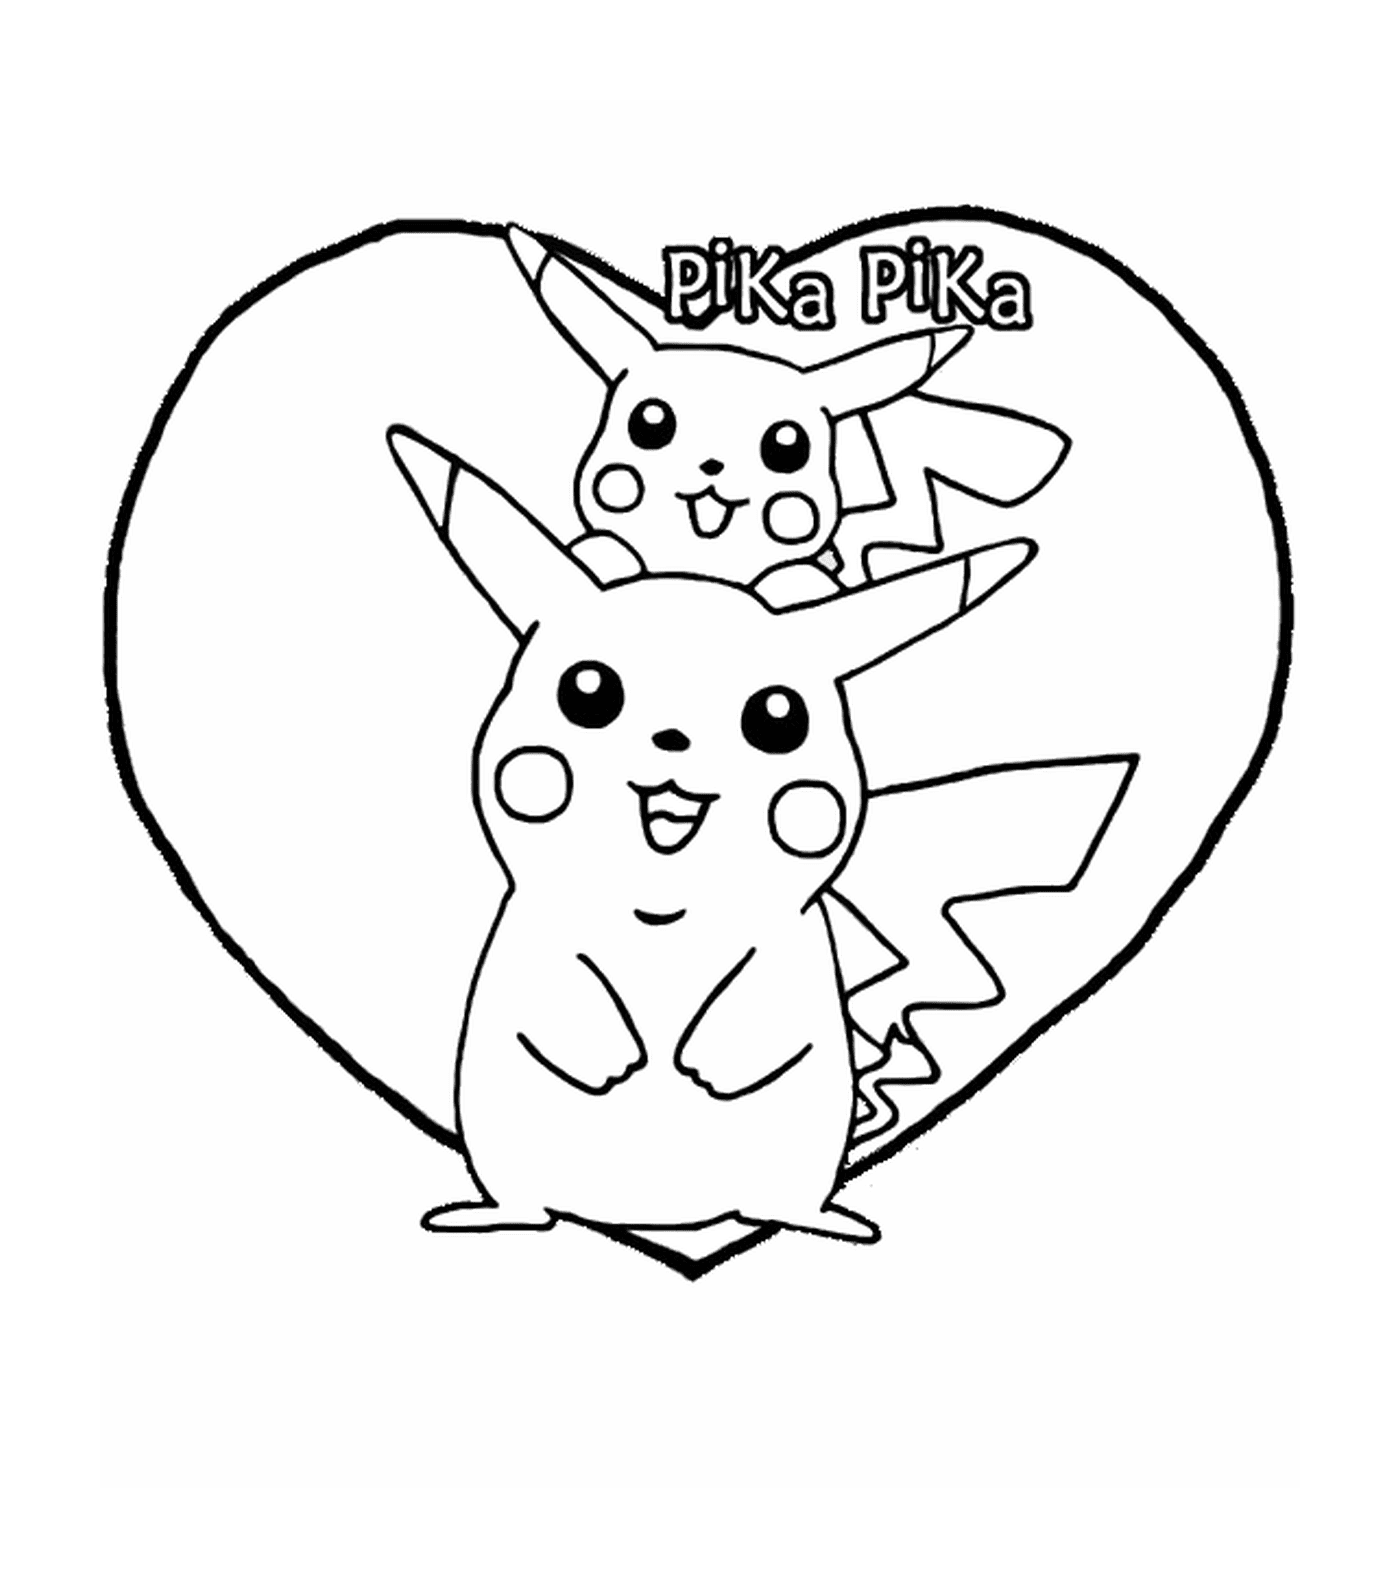  Pikachu, cuore adorabile 